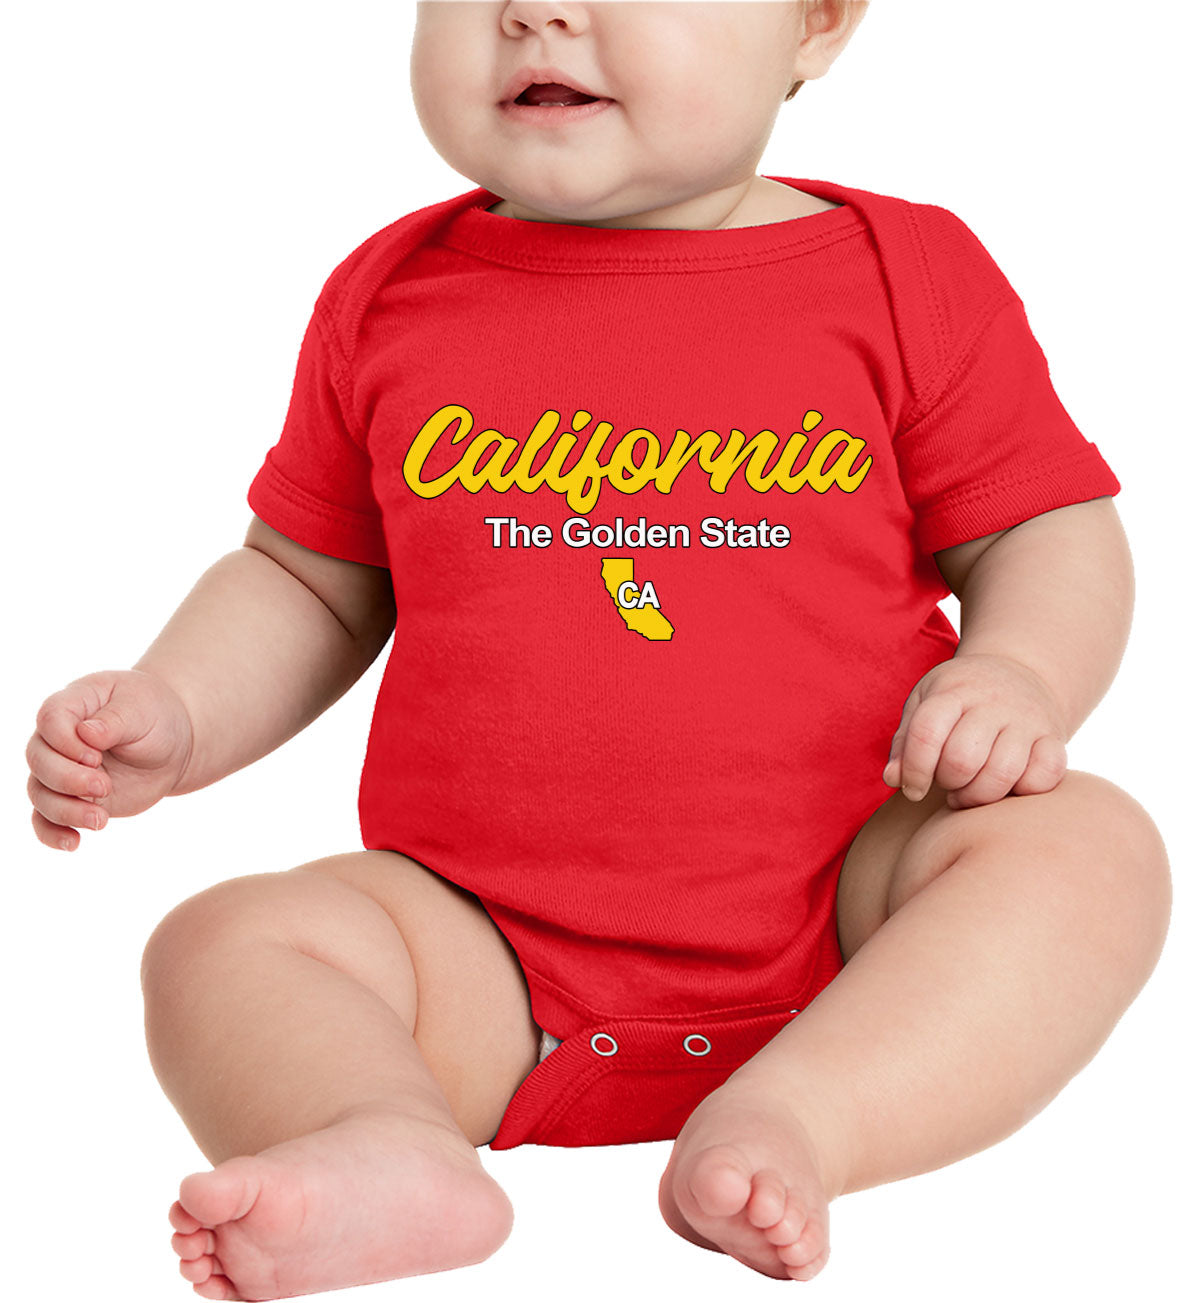 California The Golden State Baby Onesie